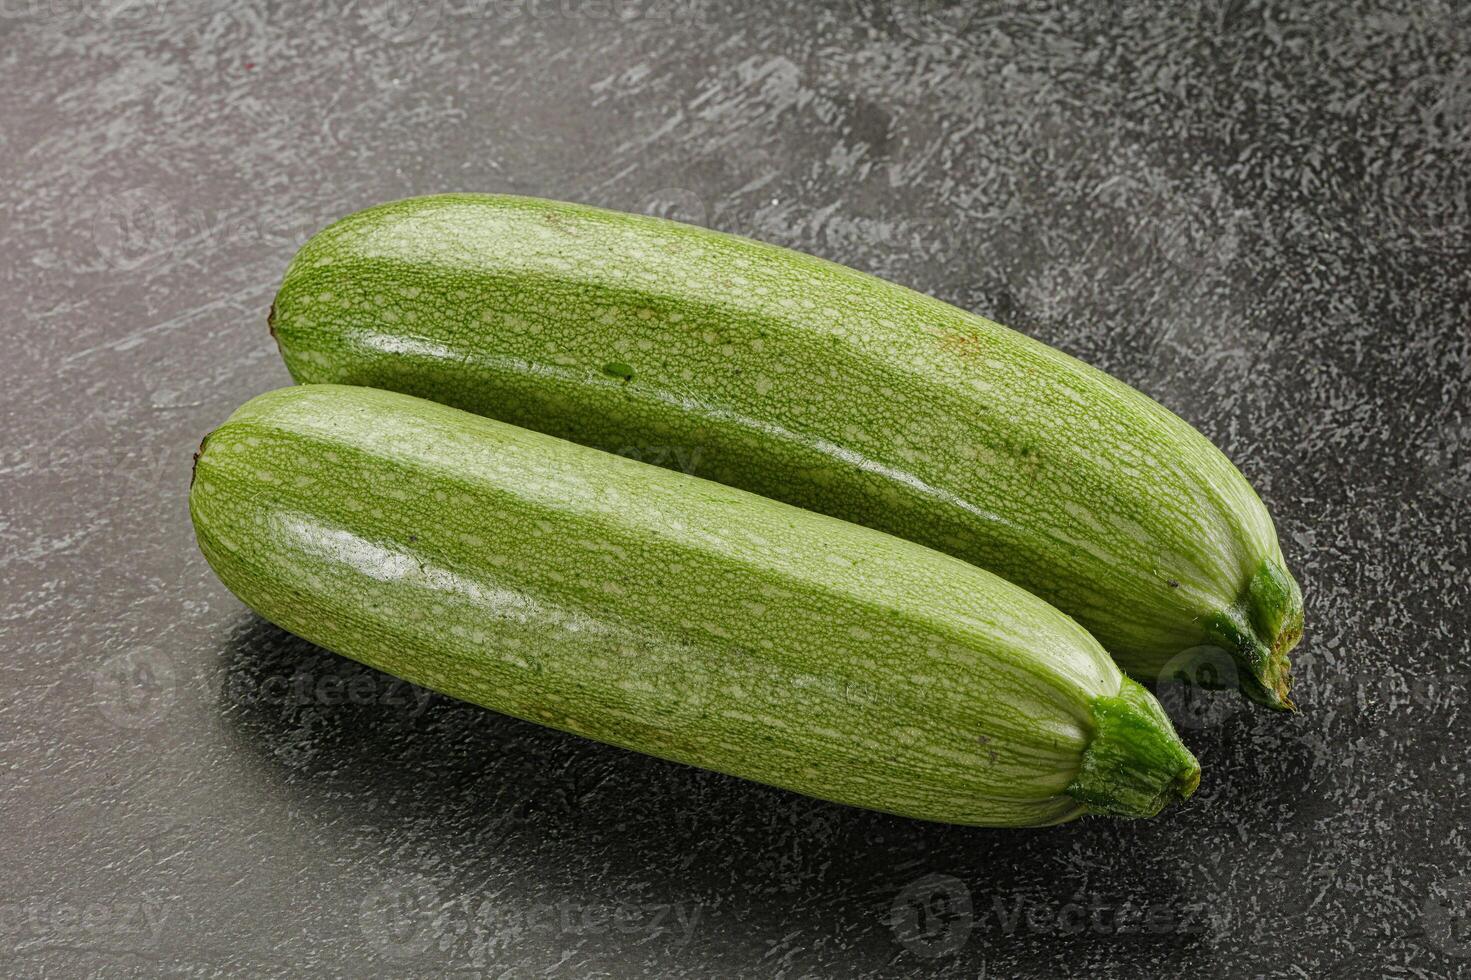 Raw green ripe zucchini vegetable photo